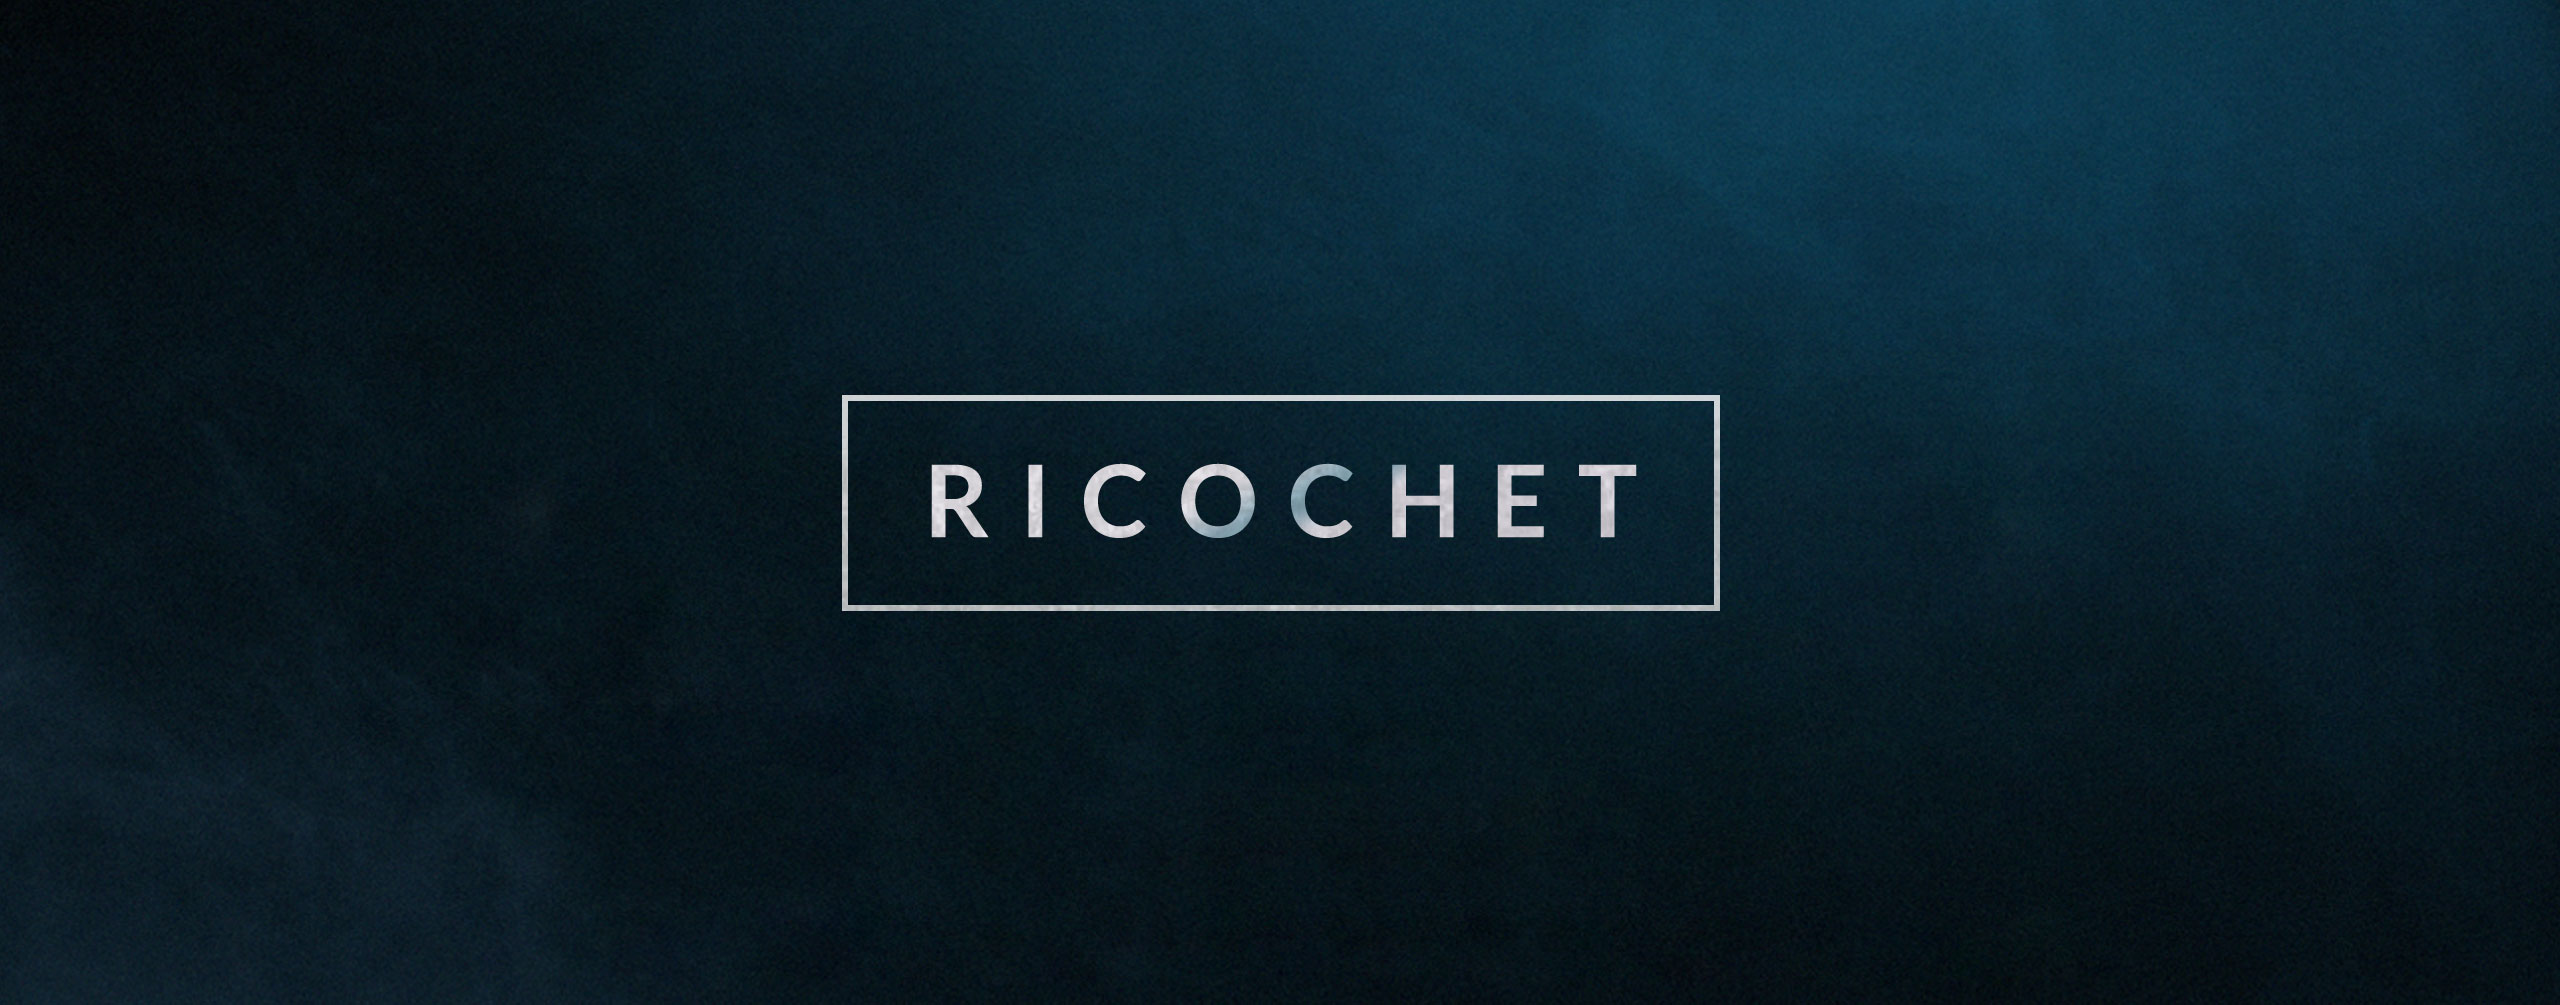 ricochet definition